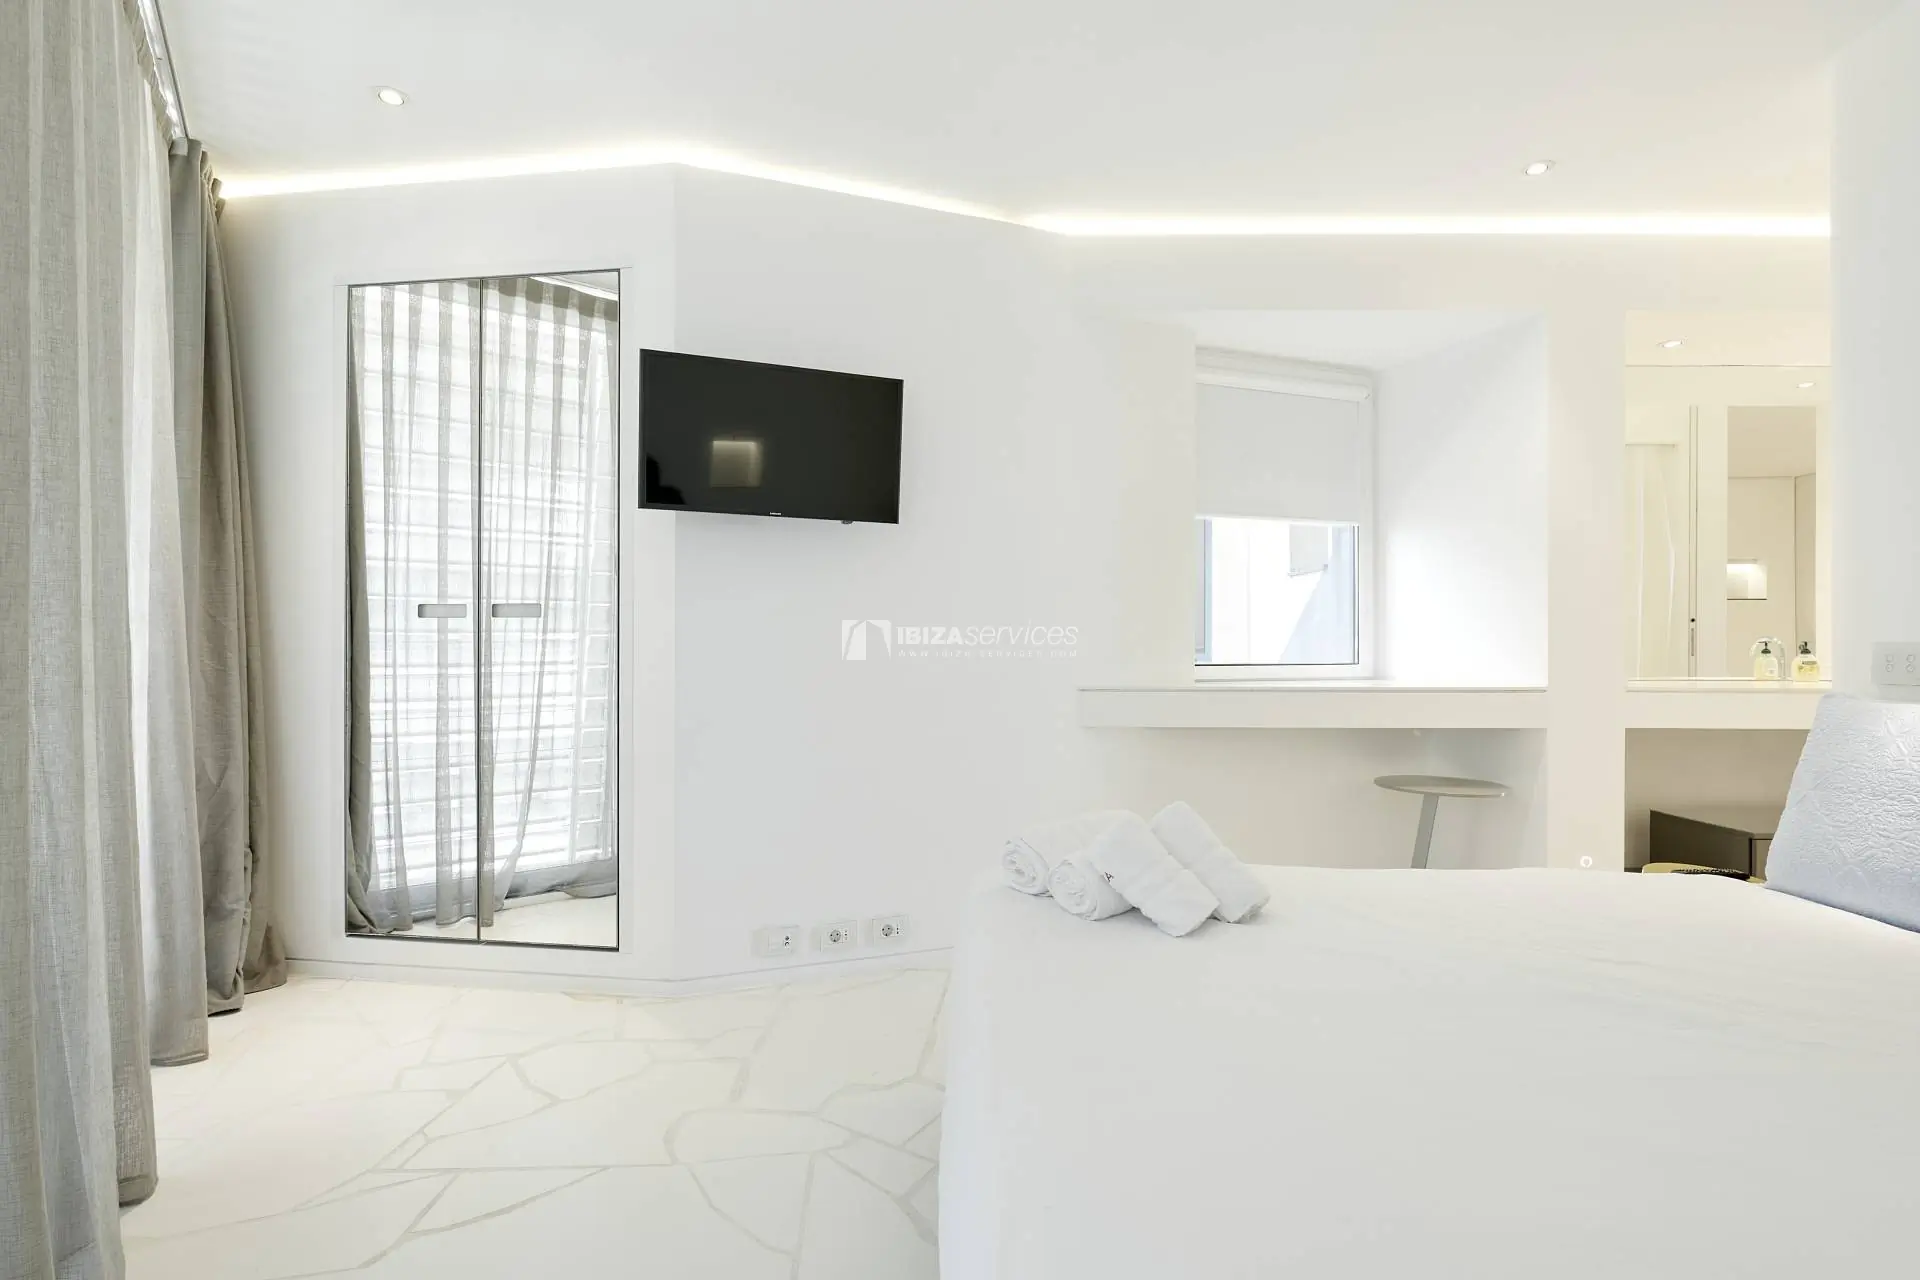 4071 Location d’un appartement de luxe de 2 chambres Las Boas de Ibiza.